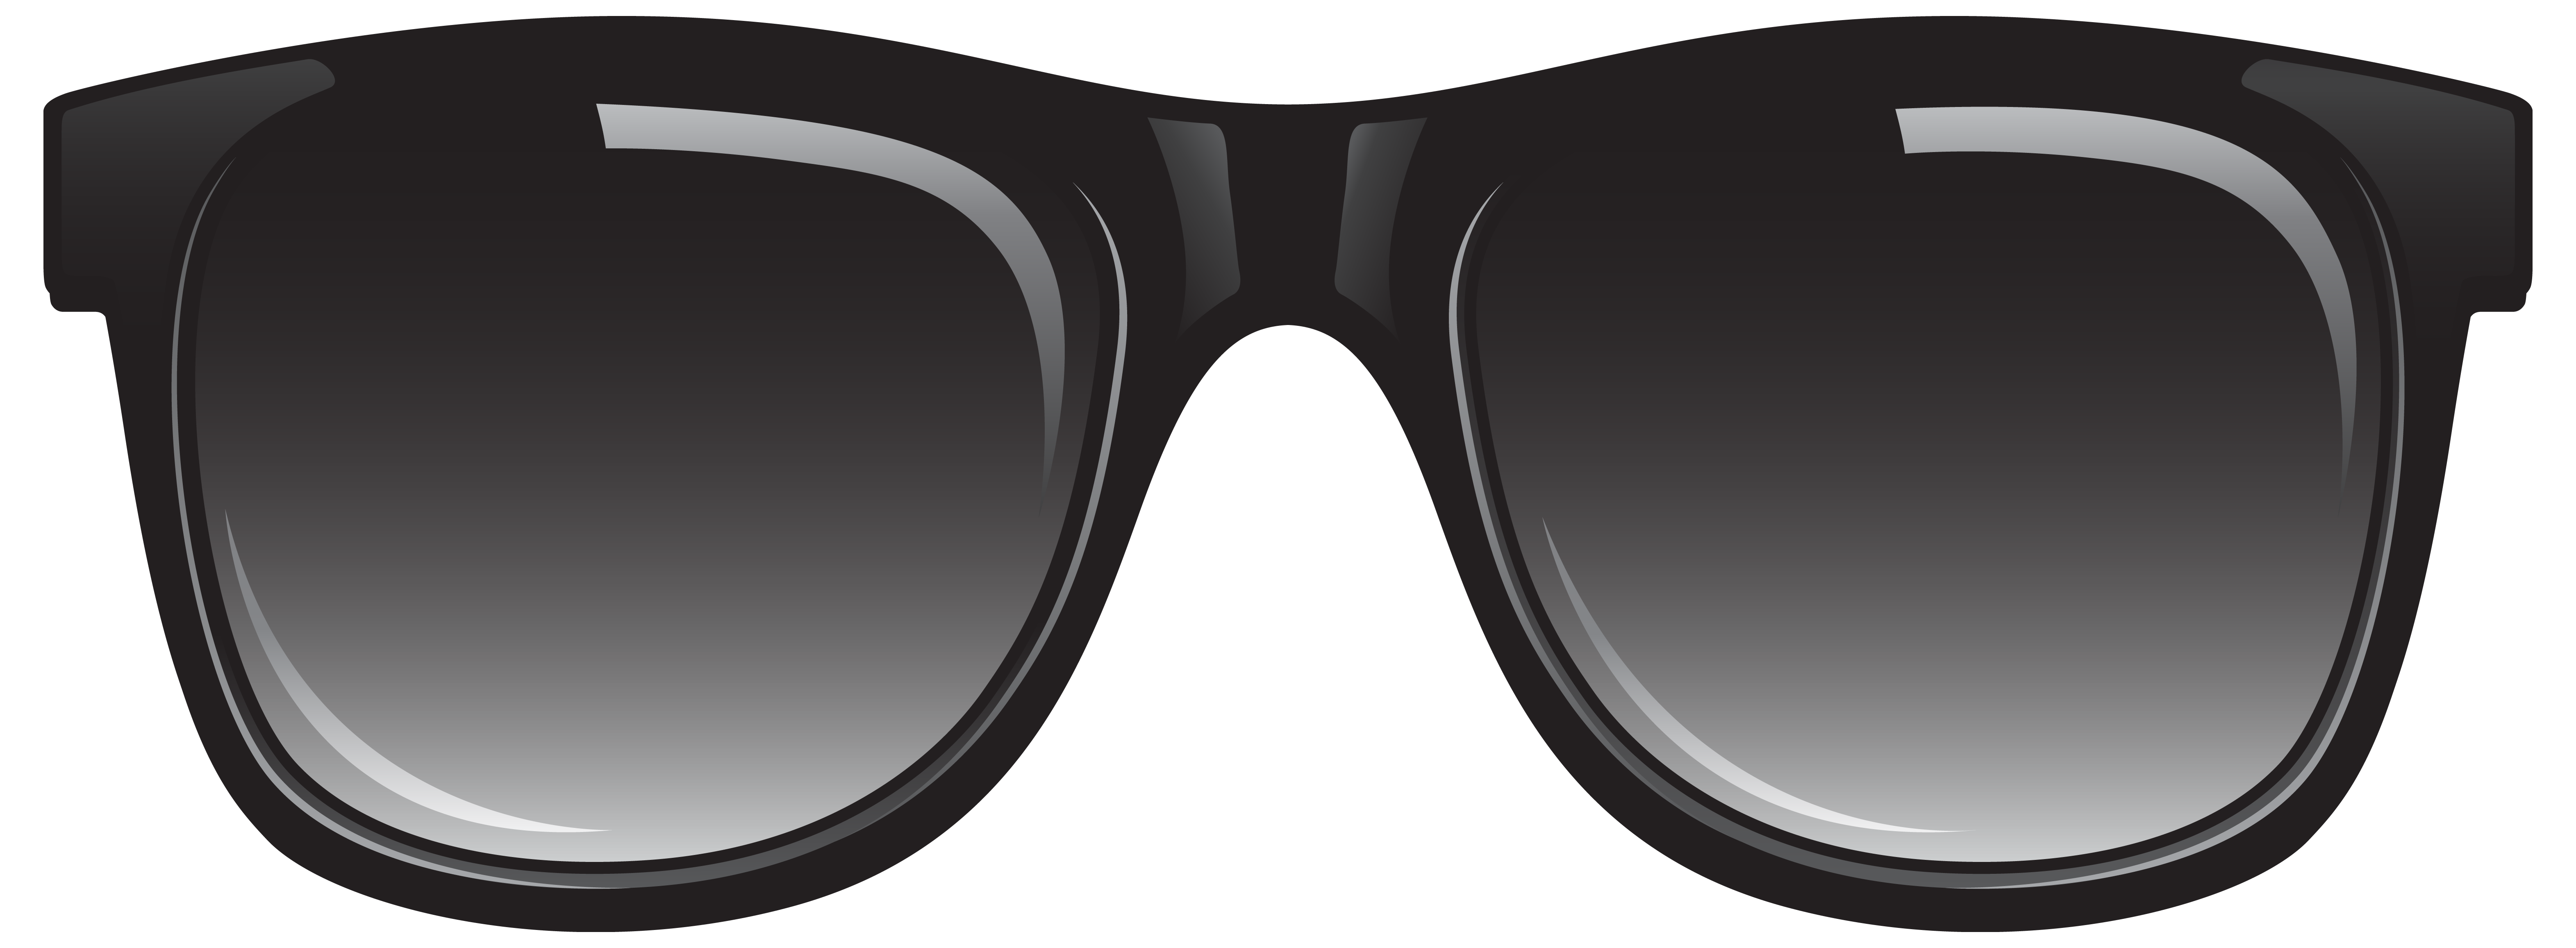 Sunglasses Png File - Glasses, Transparent background PNG HD thumbnail